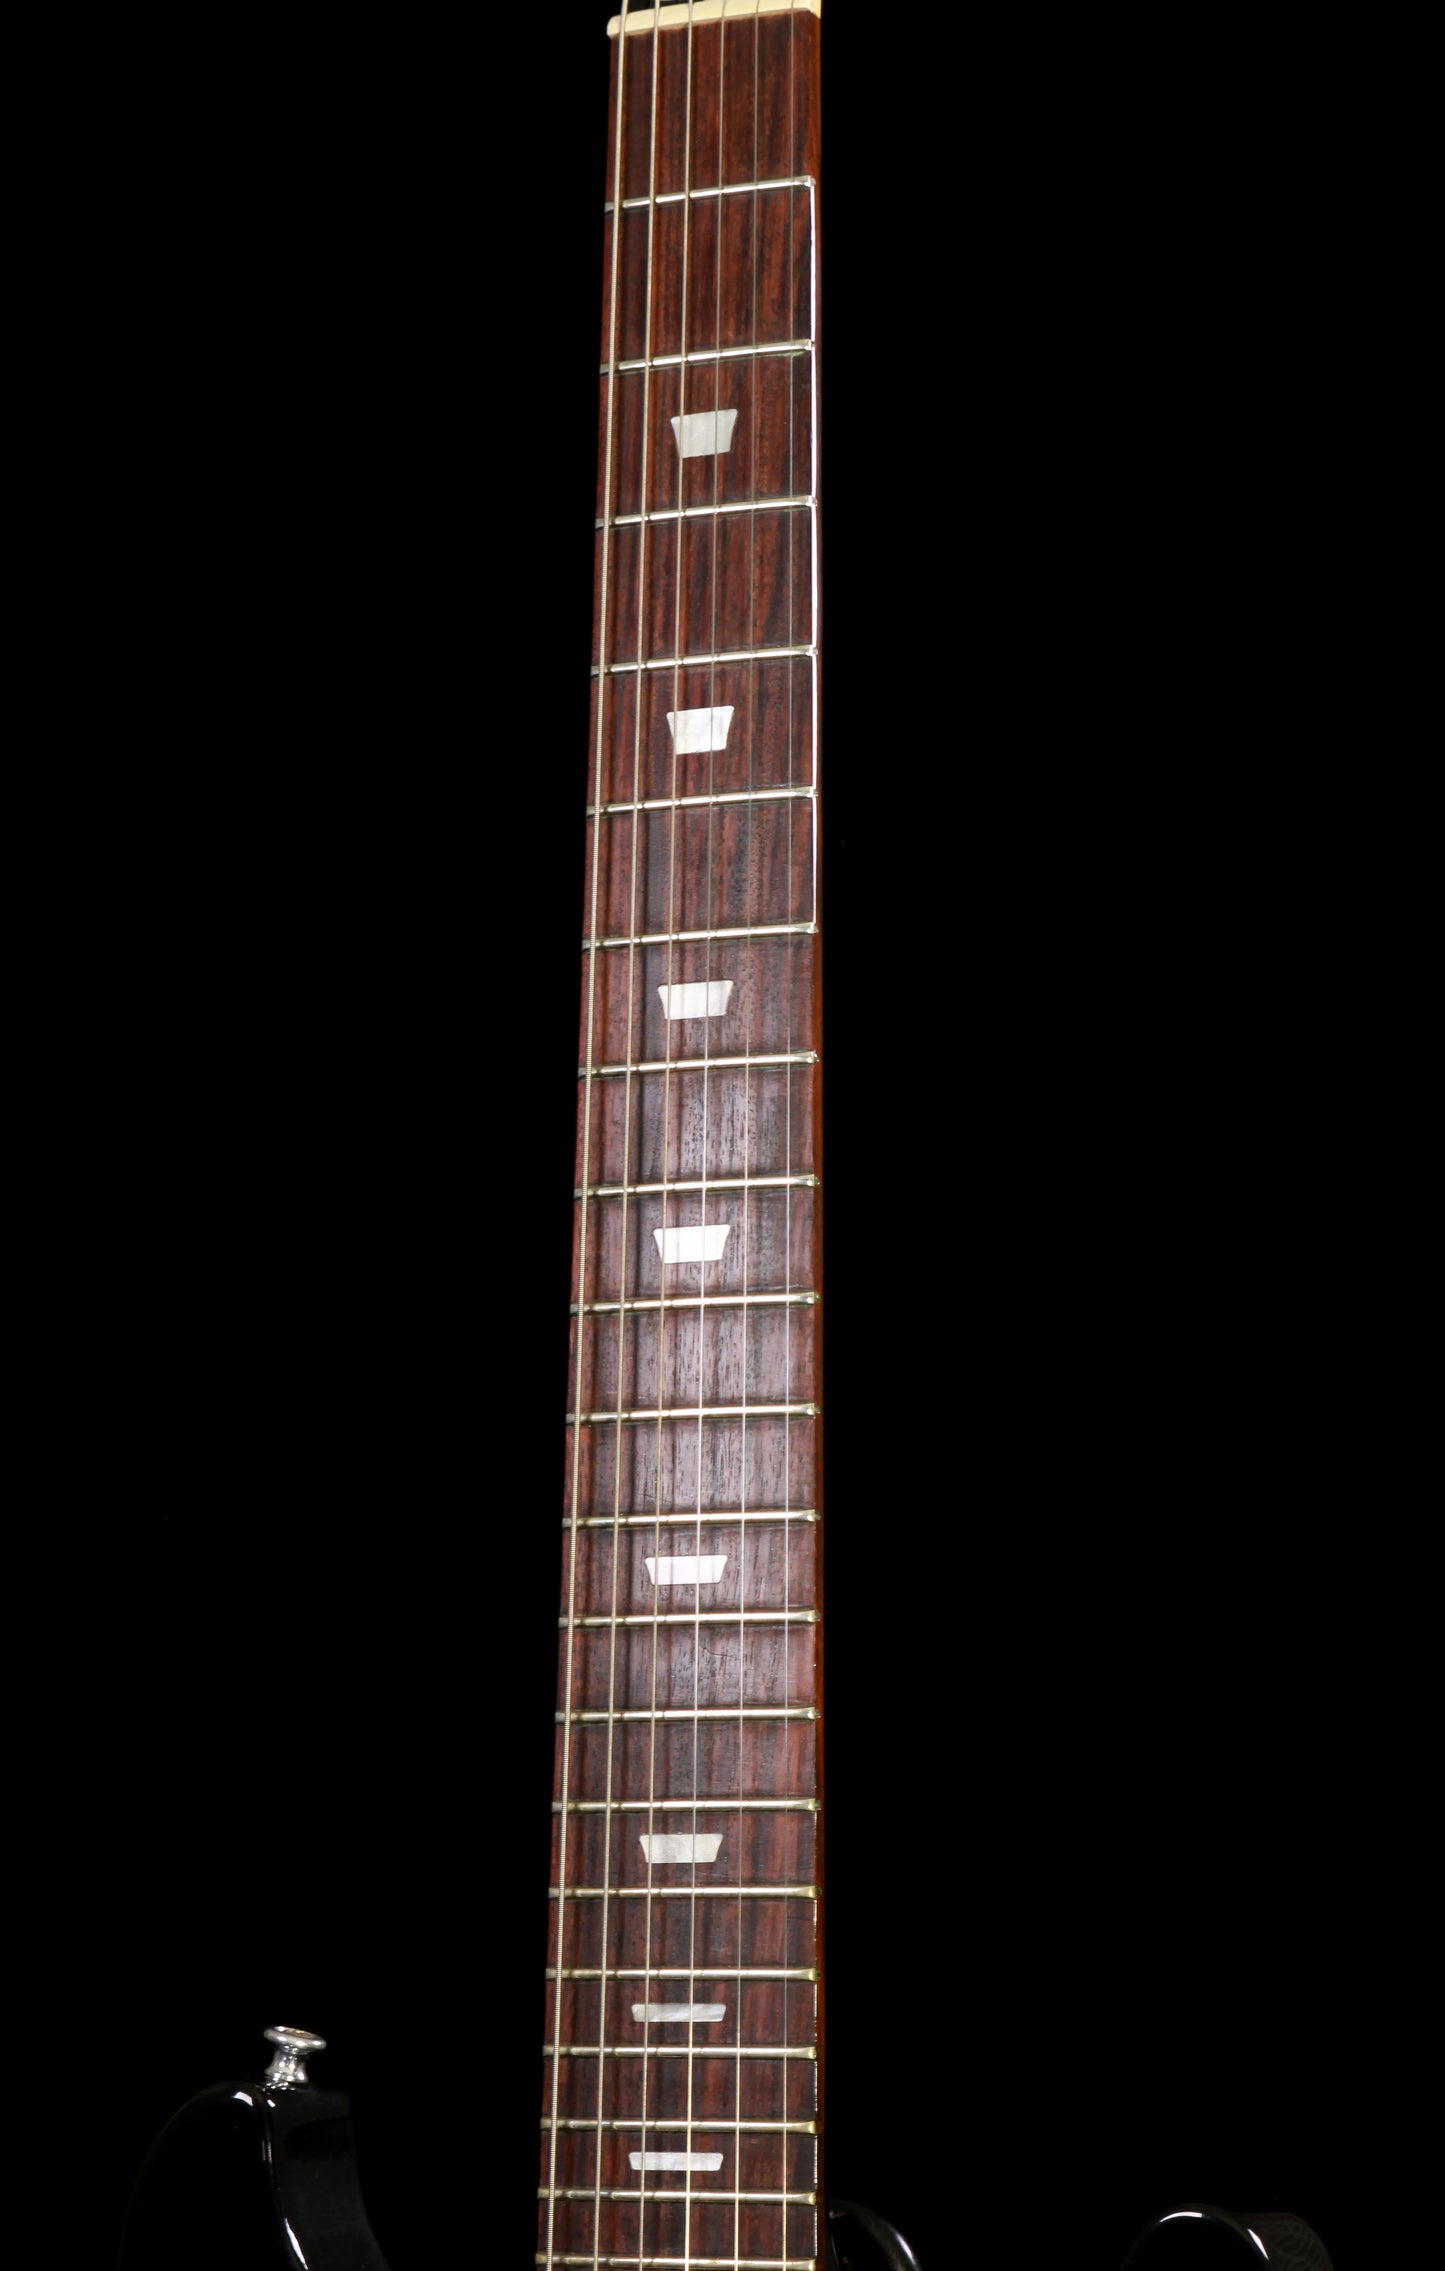 Gibson Les Paul Junior Lite Ebony Gloss 2001